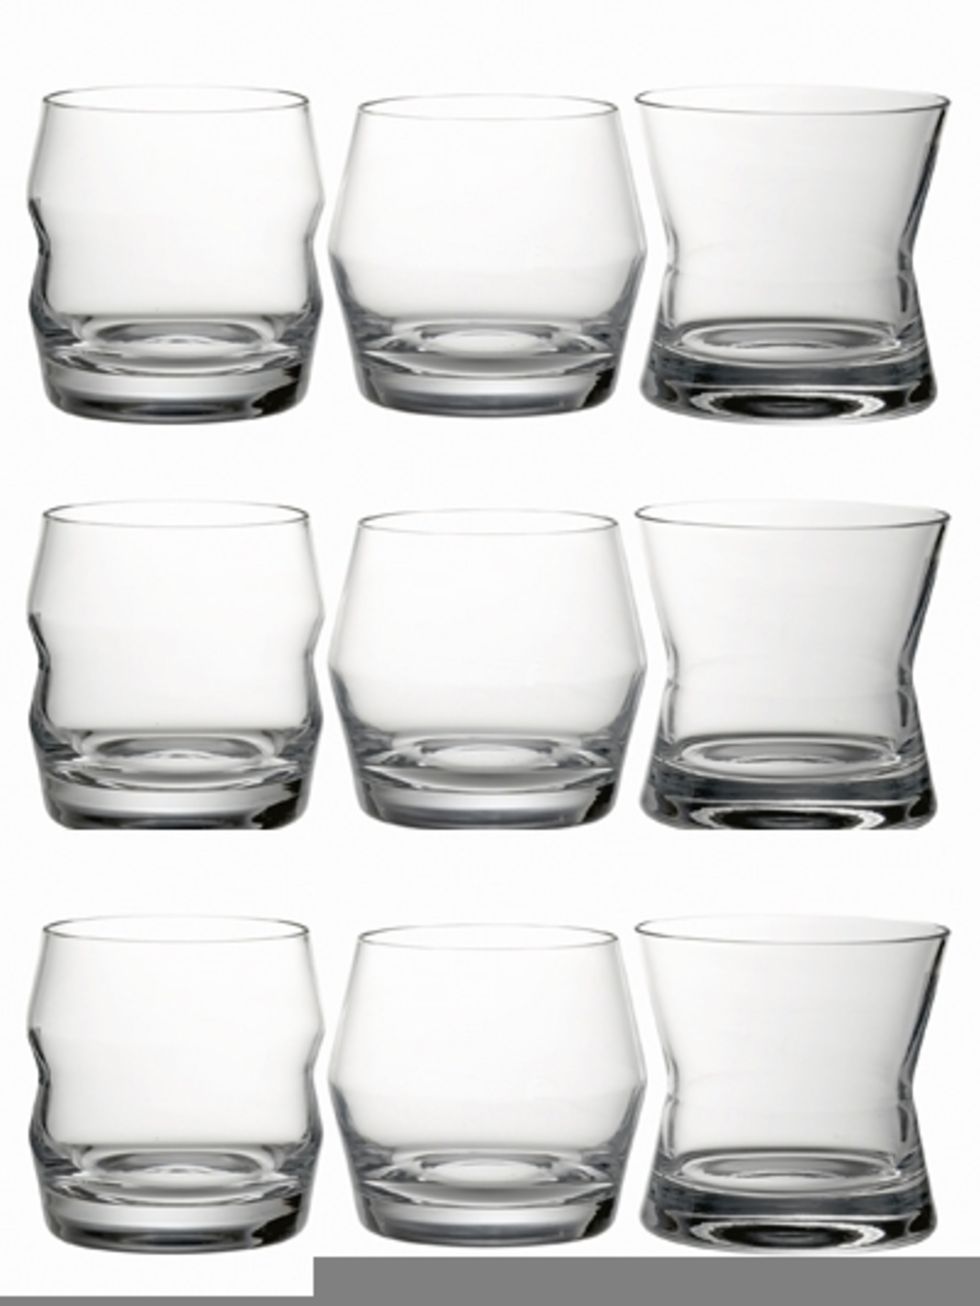 Liquid, Fluid, Drinkware, Glass, White, Transparent material, Barware, Serveware, Highball glass, Black-and-white, 